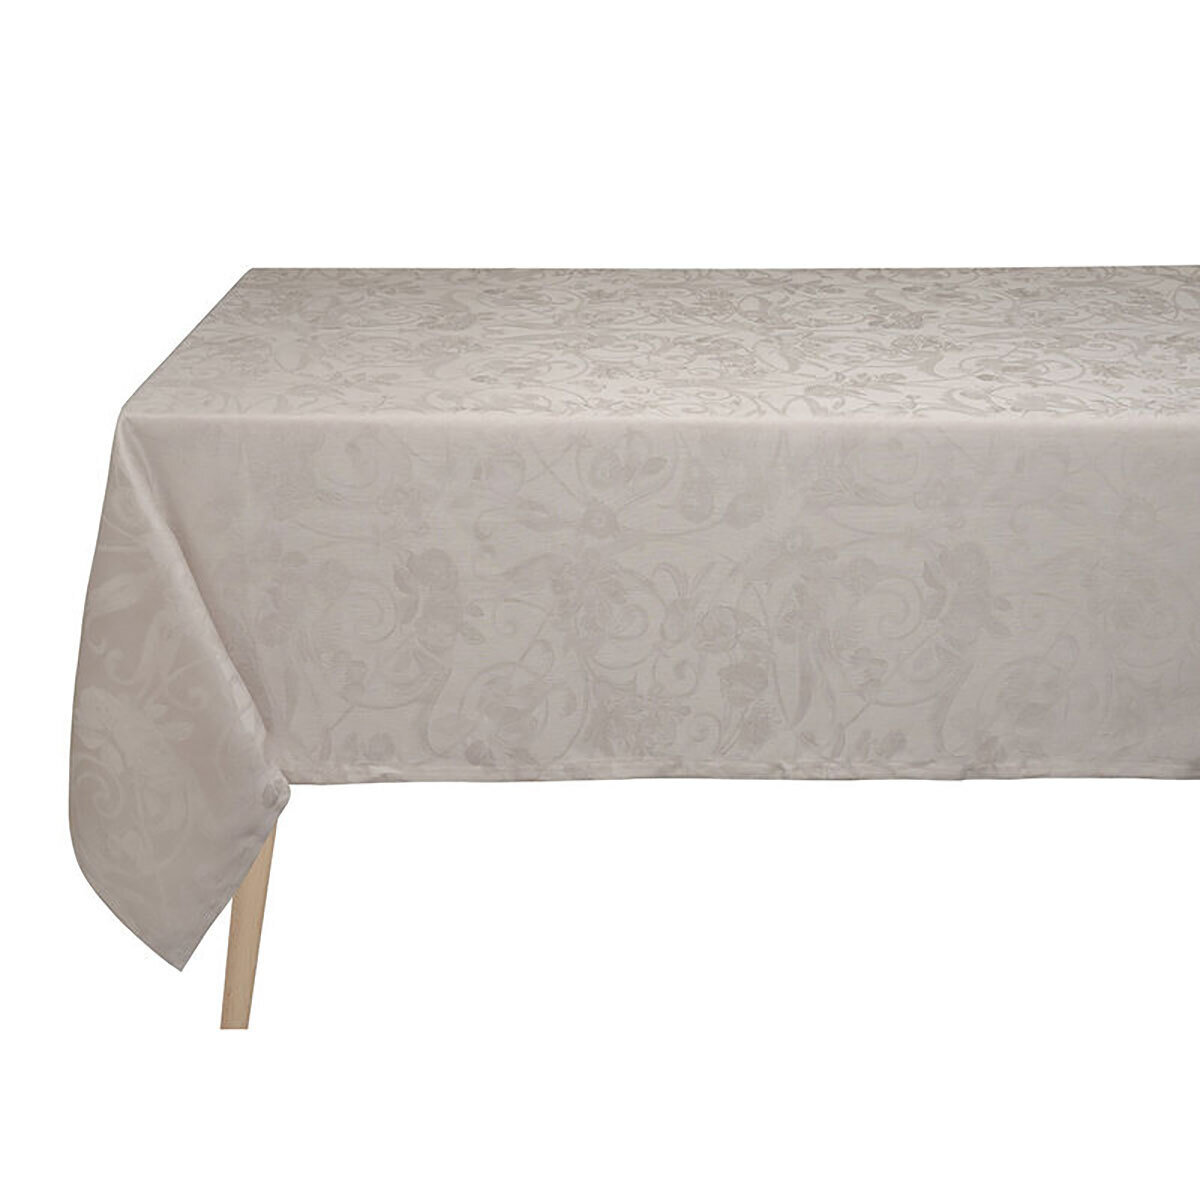 Le Jacquard Francais Tablecloth Tivoli Beige 100% Linen 69 x 69 Inch 28102